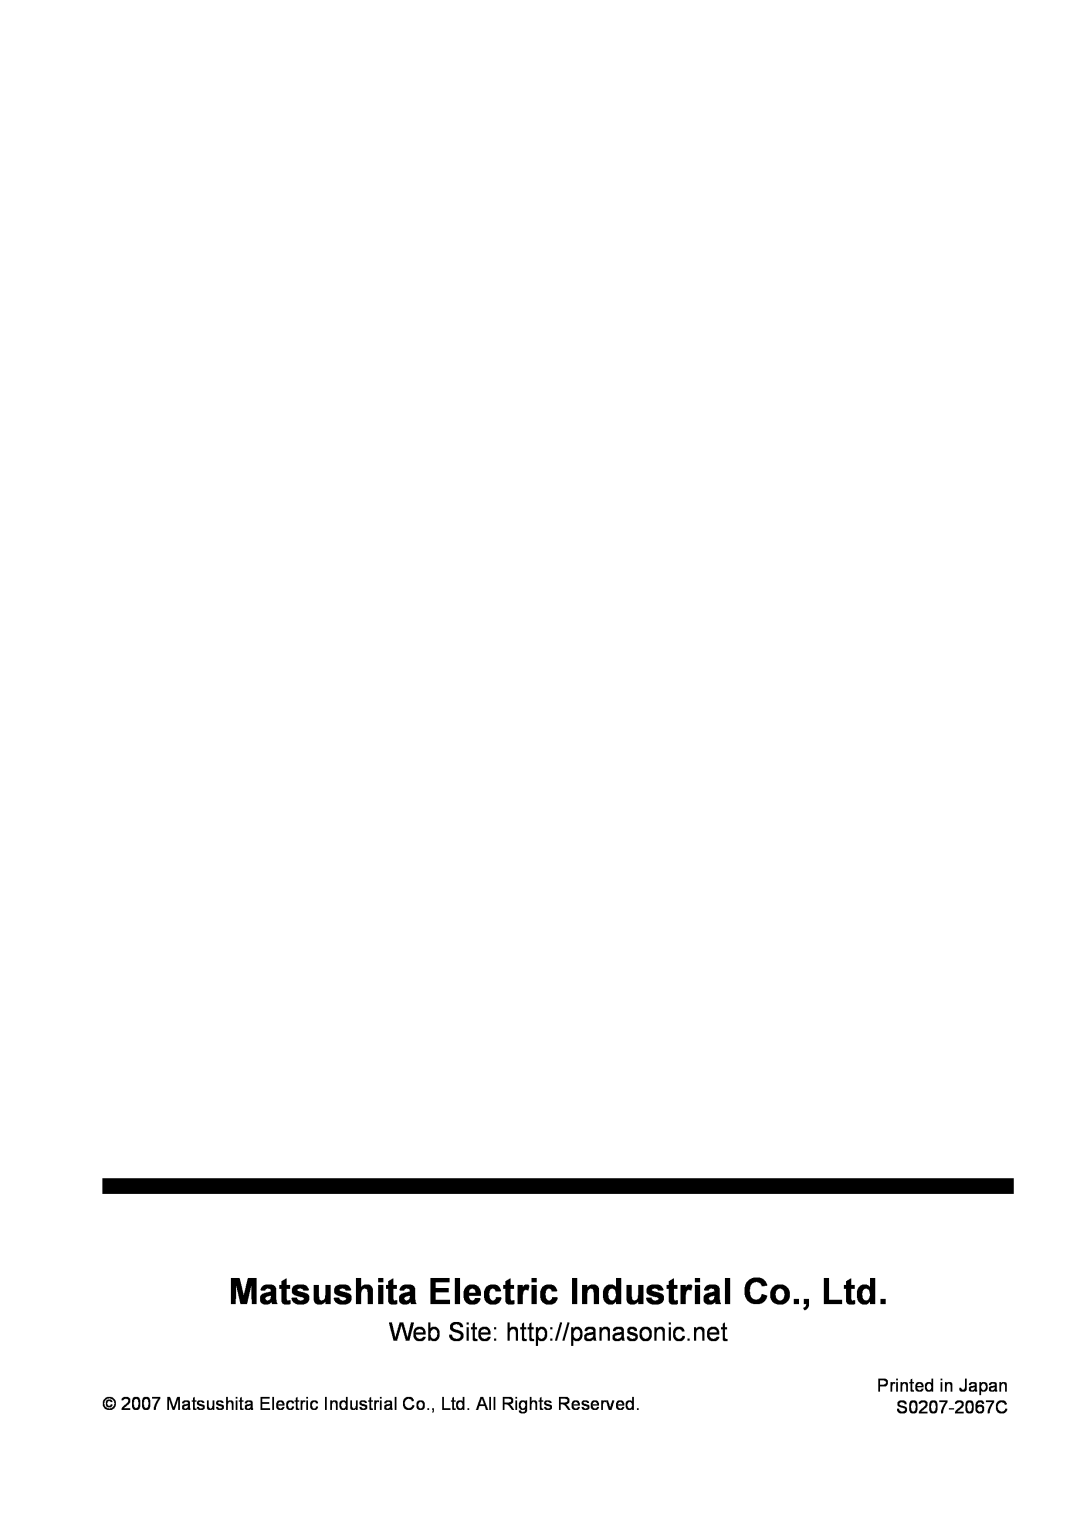 Philips PT-F100NTE manual Web Site http//panasonic.net, Printed in Japan, S0207-2067C 